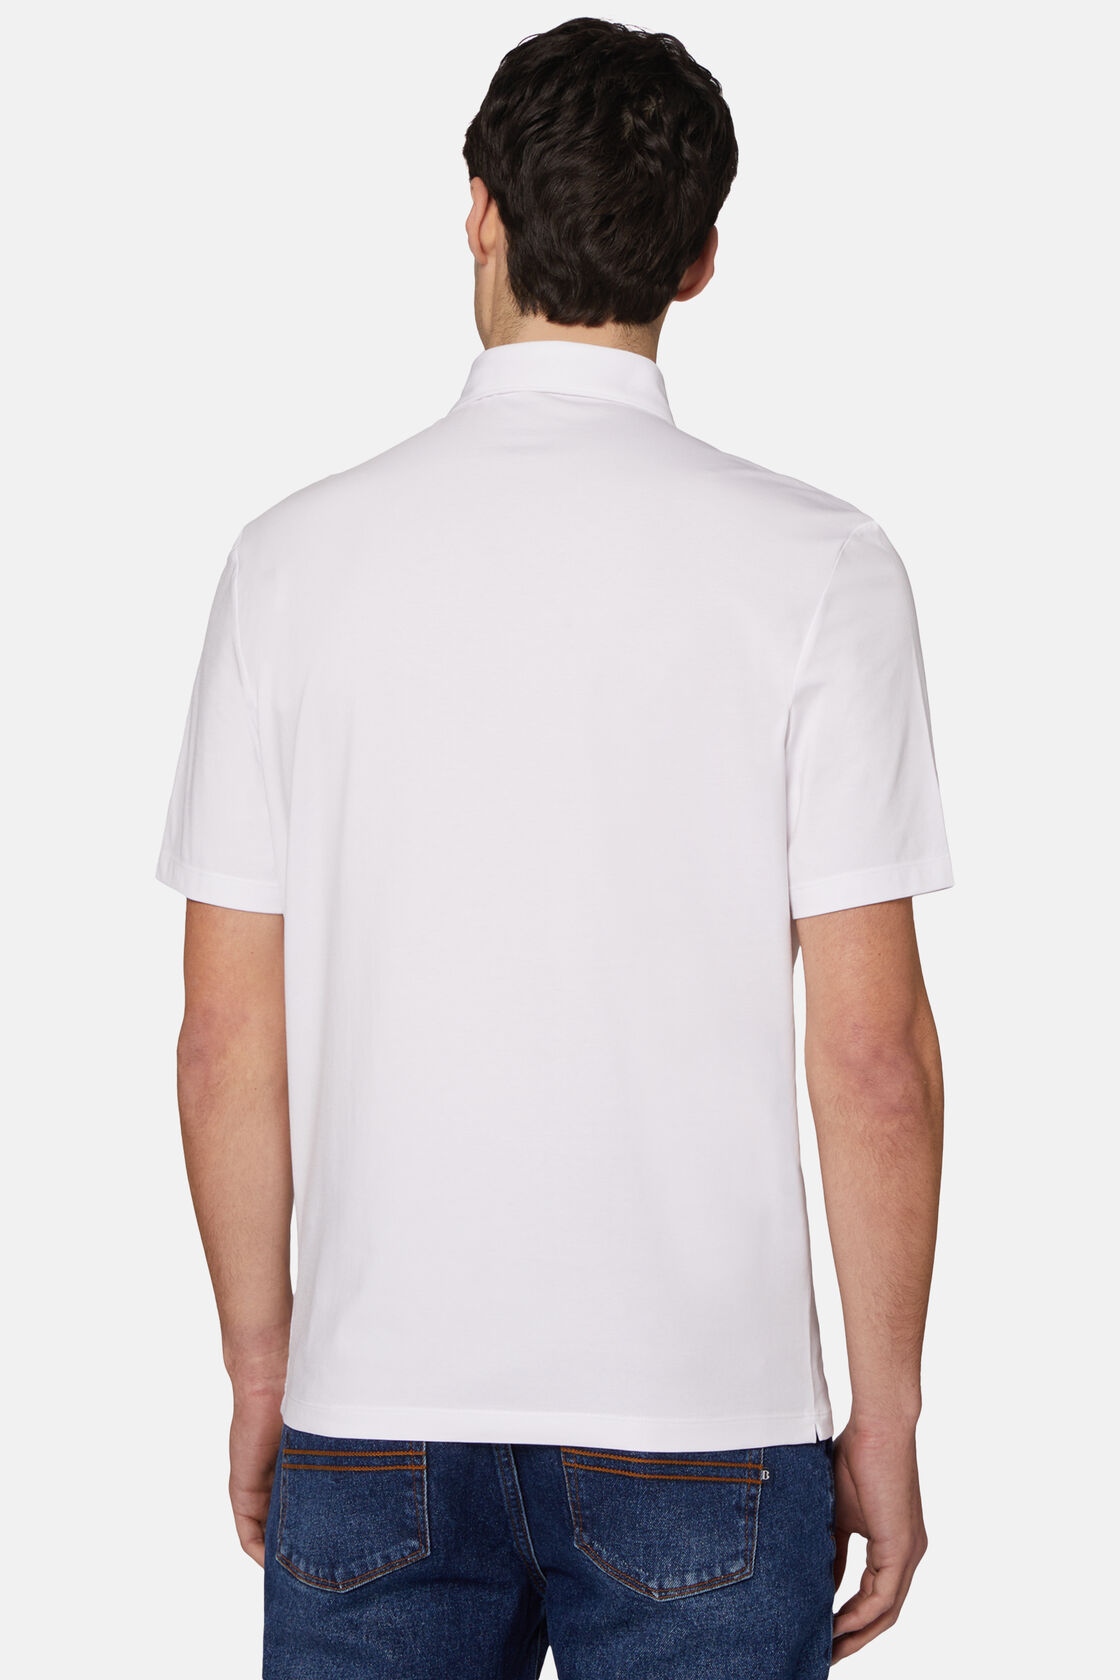 Poloshirt in stretch supima katoen, White, hi-res